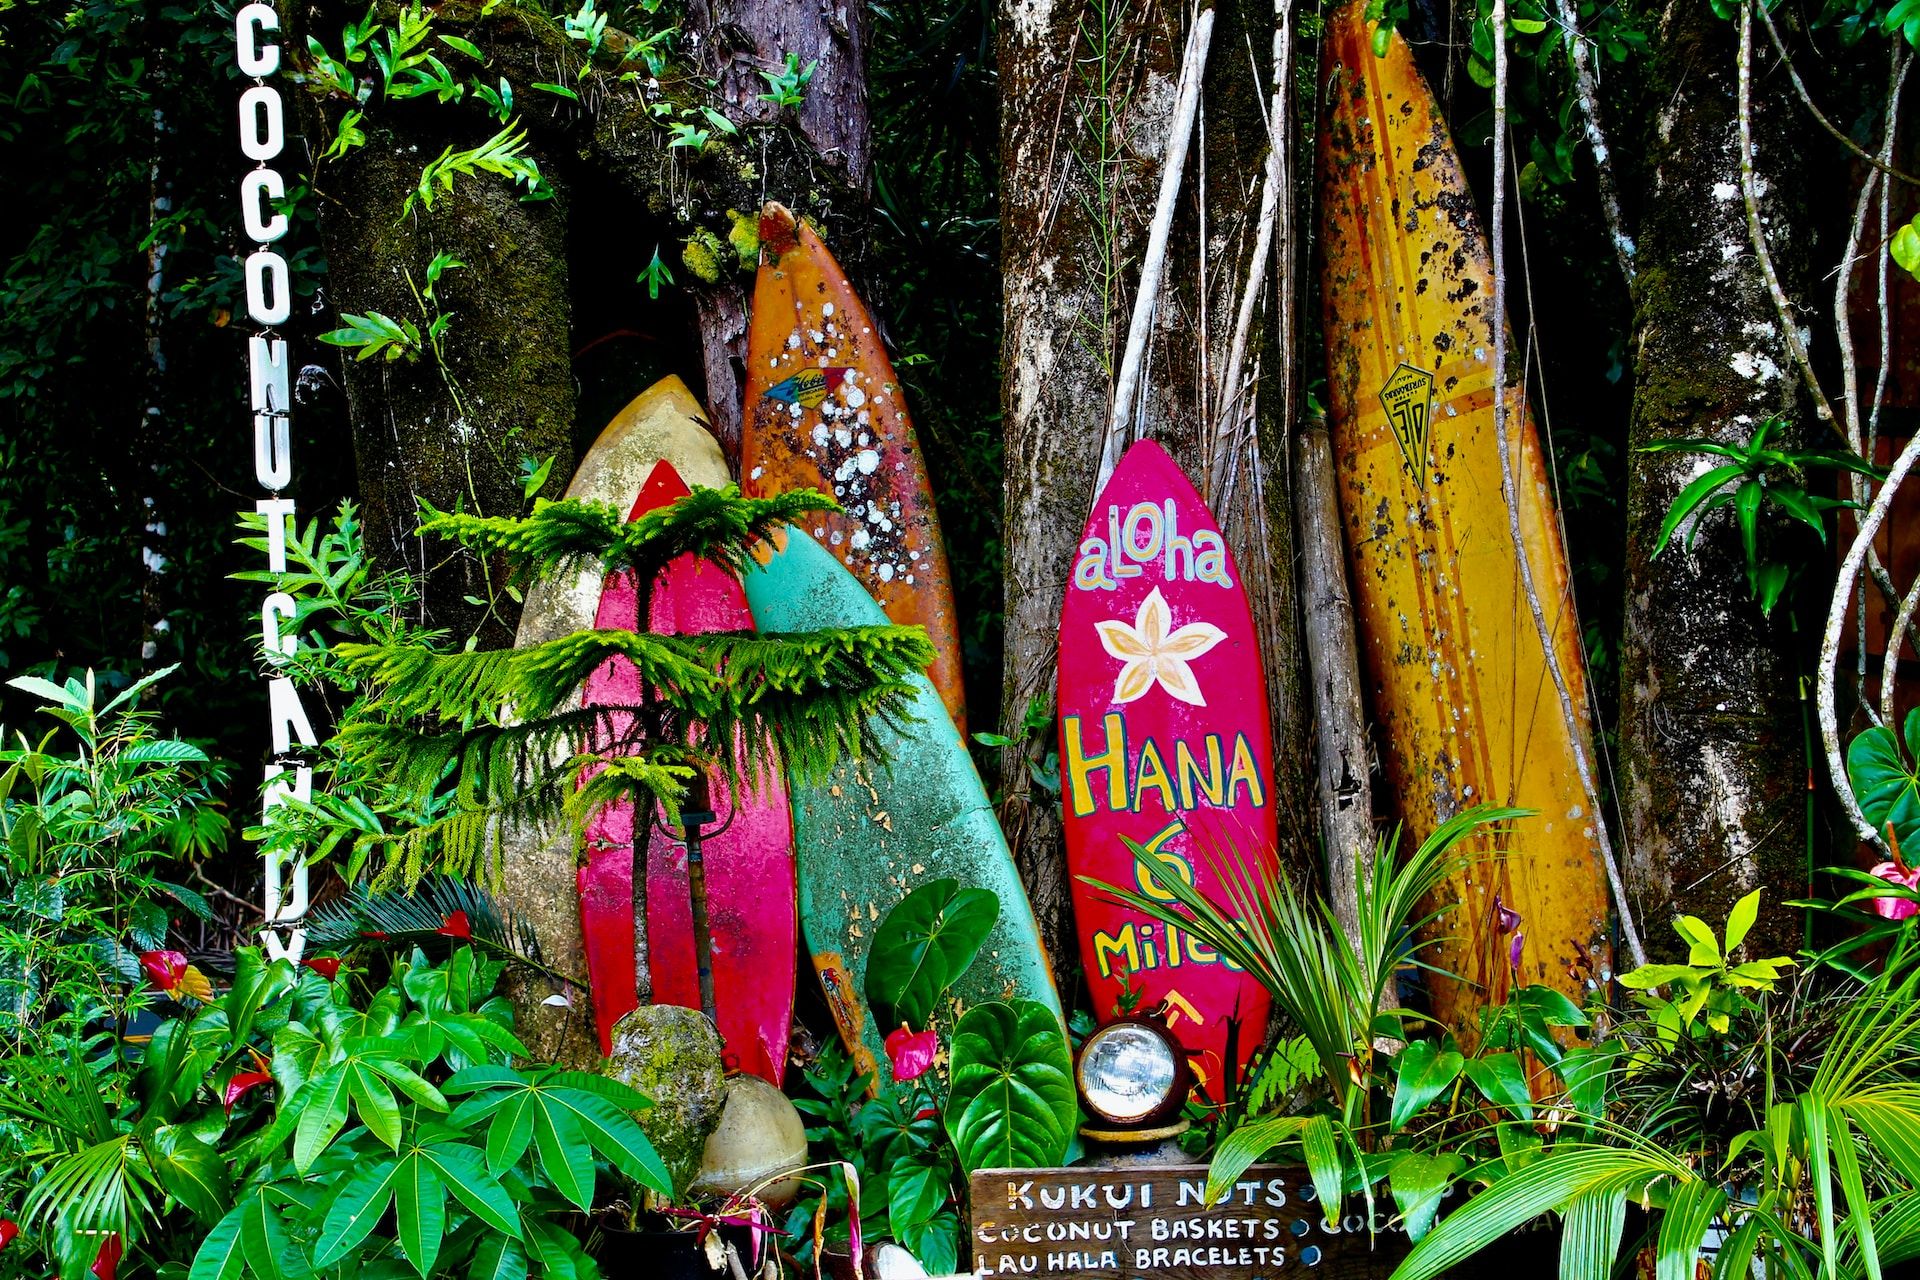 Handmade signage in Maui, Hawaii